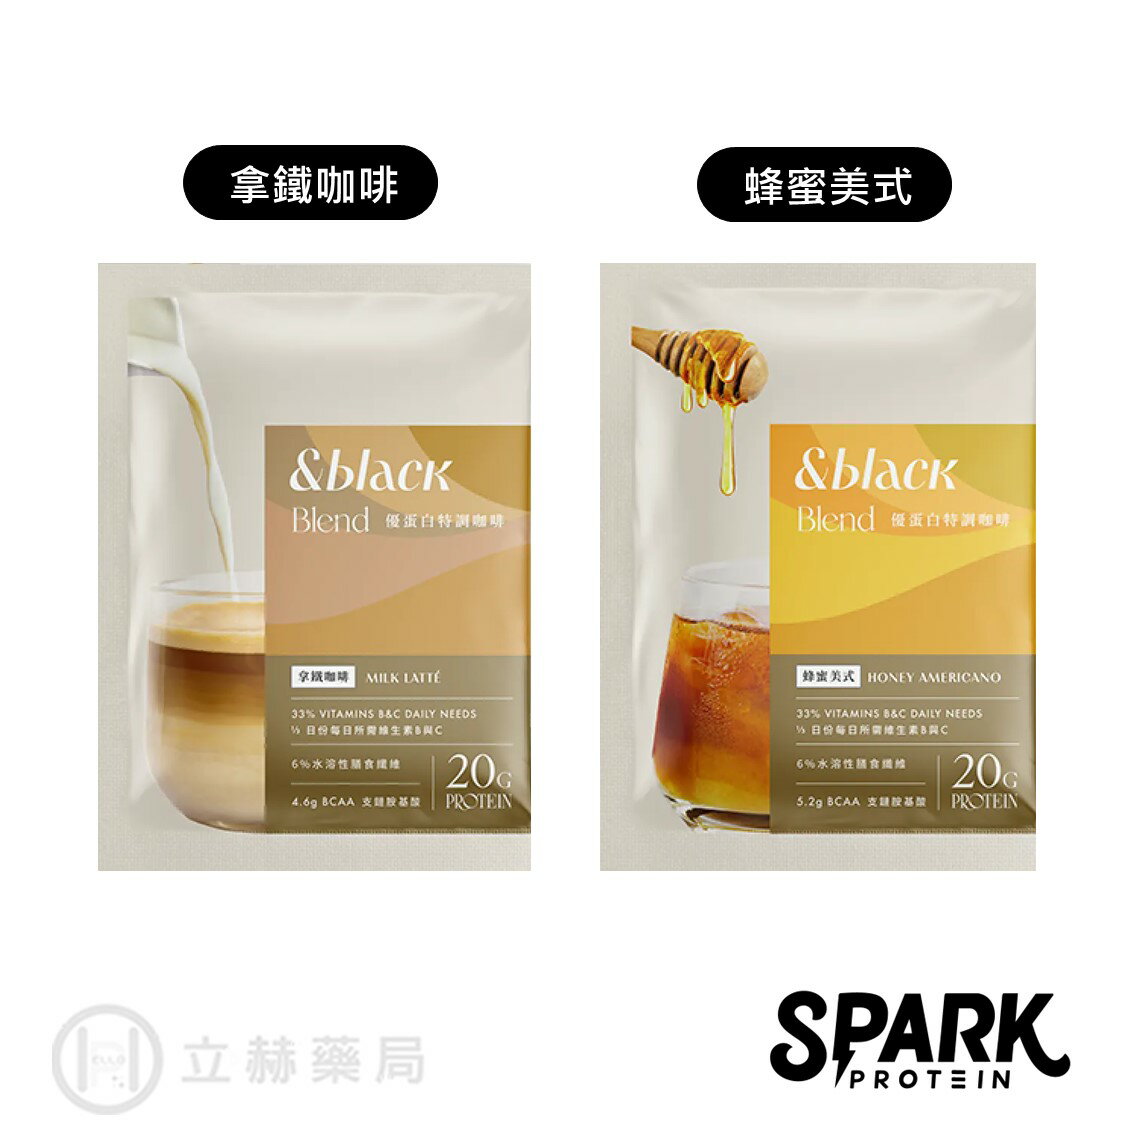 spark protein &black Blend 優蛋白特調咖啡 拿鐵咖啡 蜂蜜美式 原豆萃取 優質蛋白【立赫藥局】